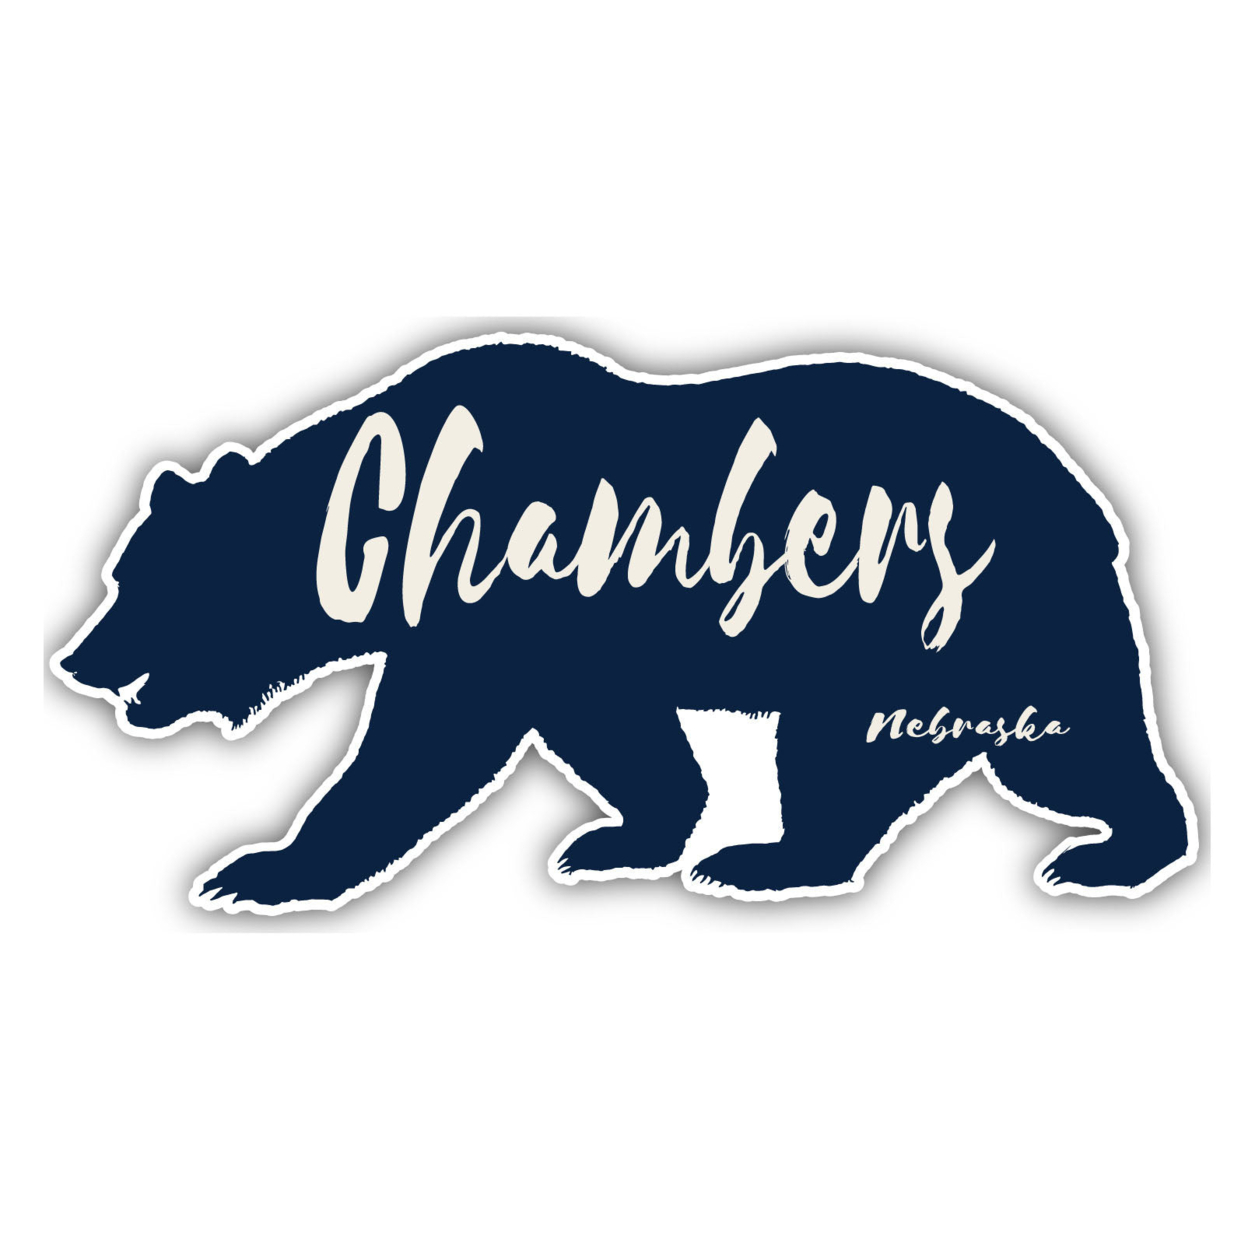 Chambers Nebraska Souvenir Decorative Stickers (Choose Theme And Size) - 4-Pack, 6-Inch, Bear